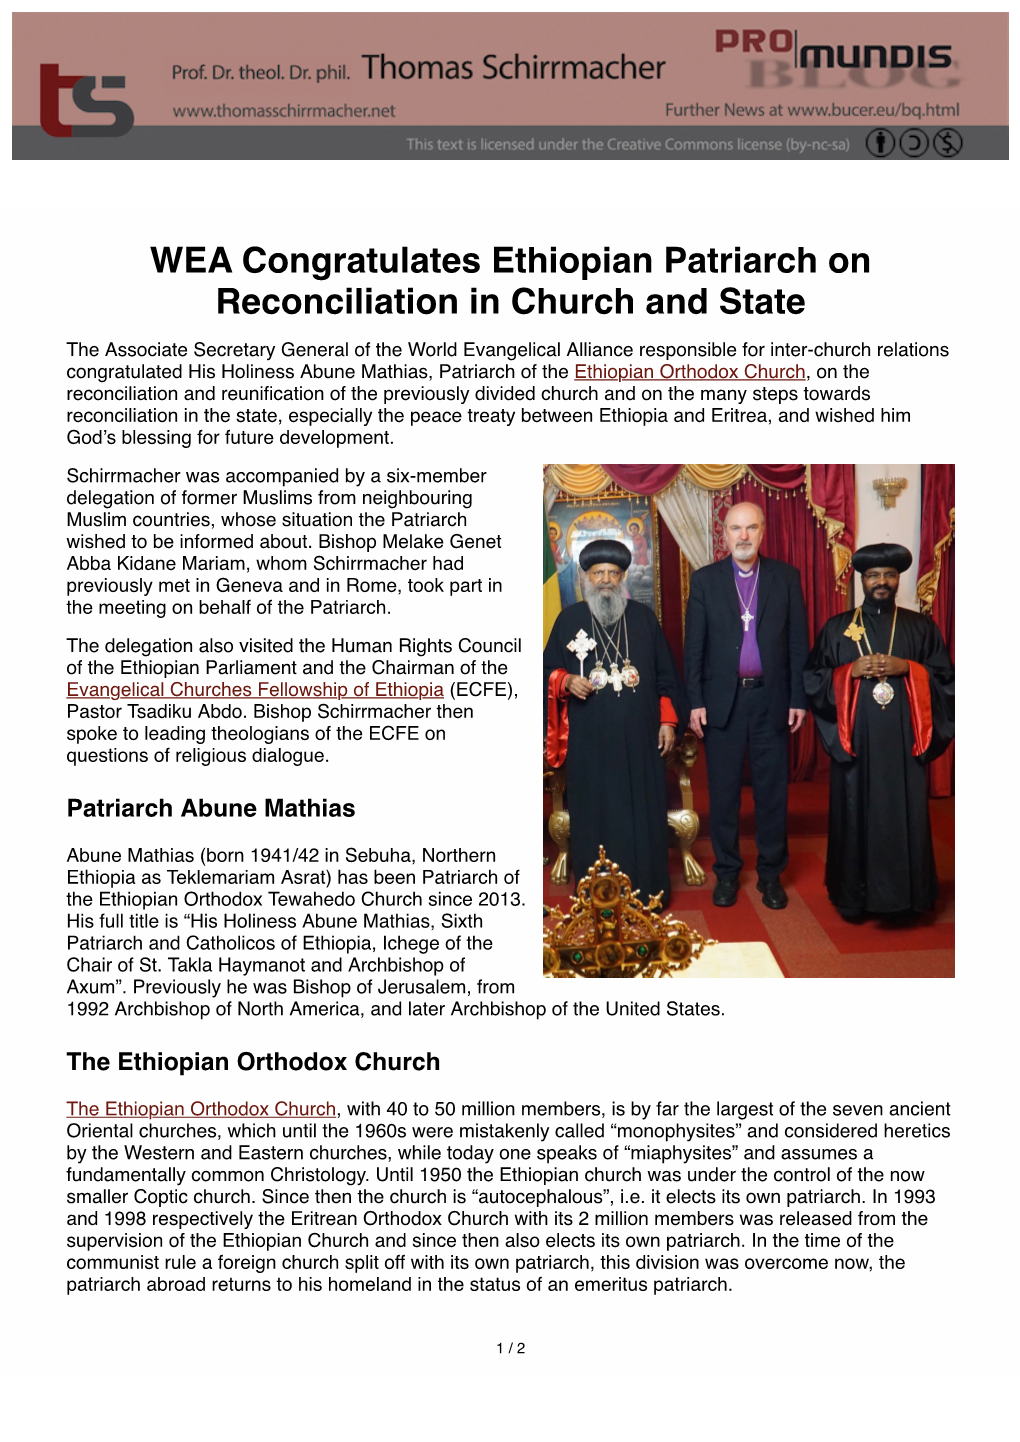 WEA Congratulates Ethiopian Patriarch on Reconciliation in Church and State